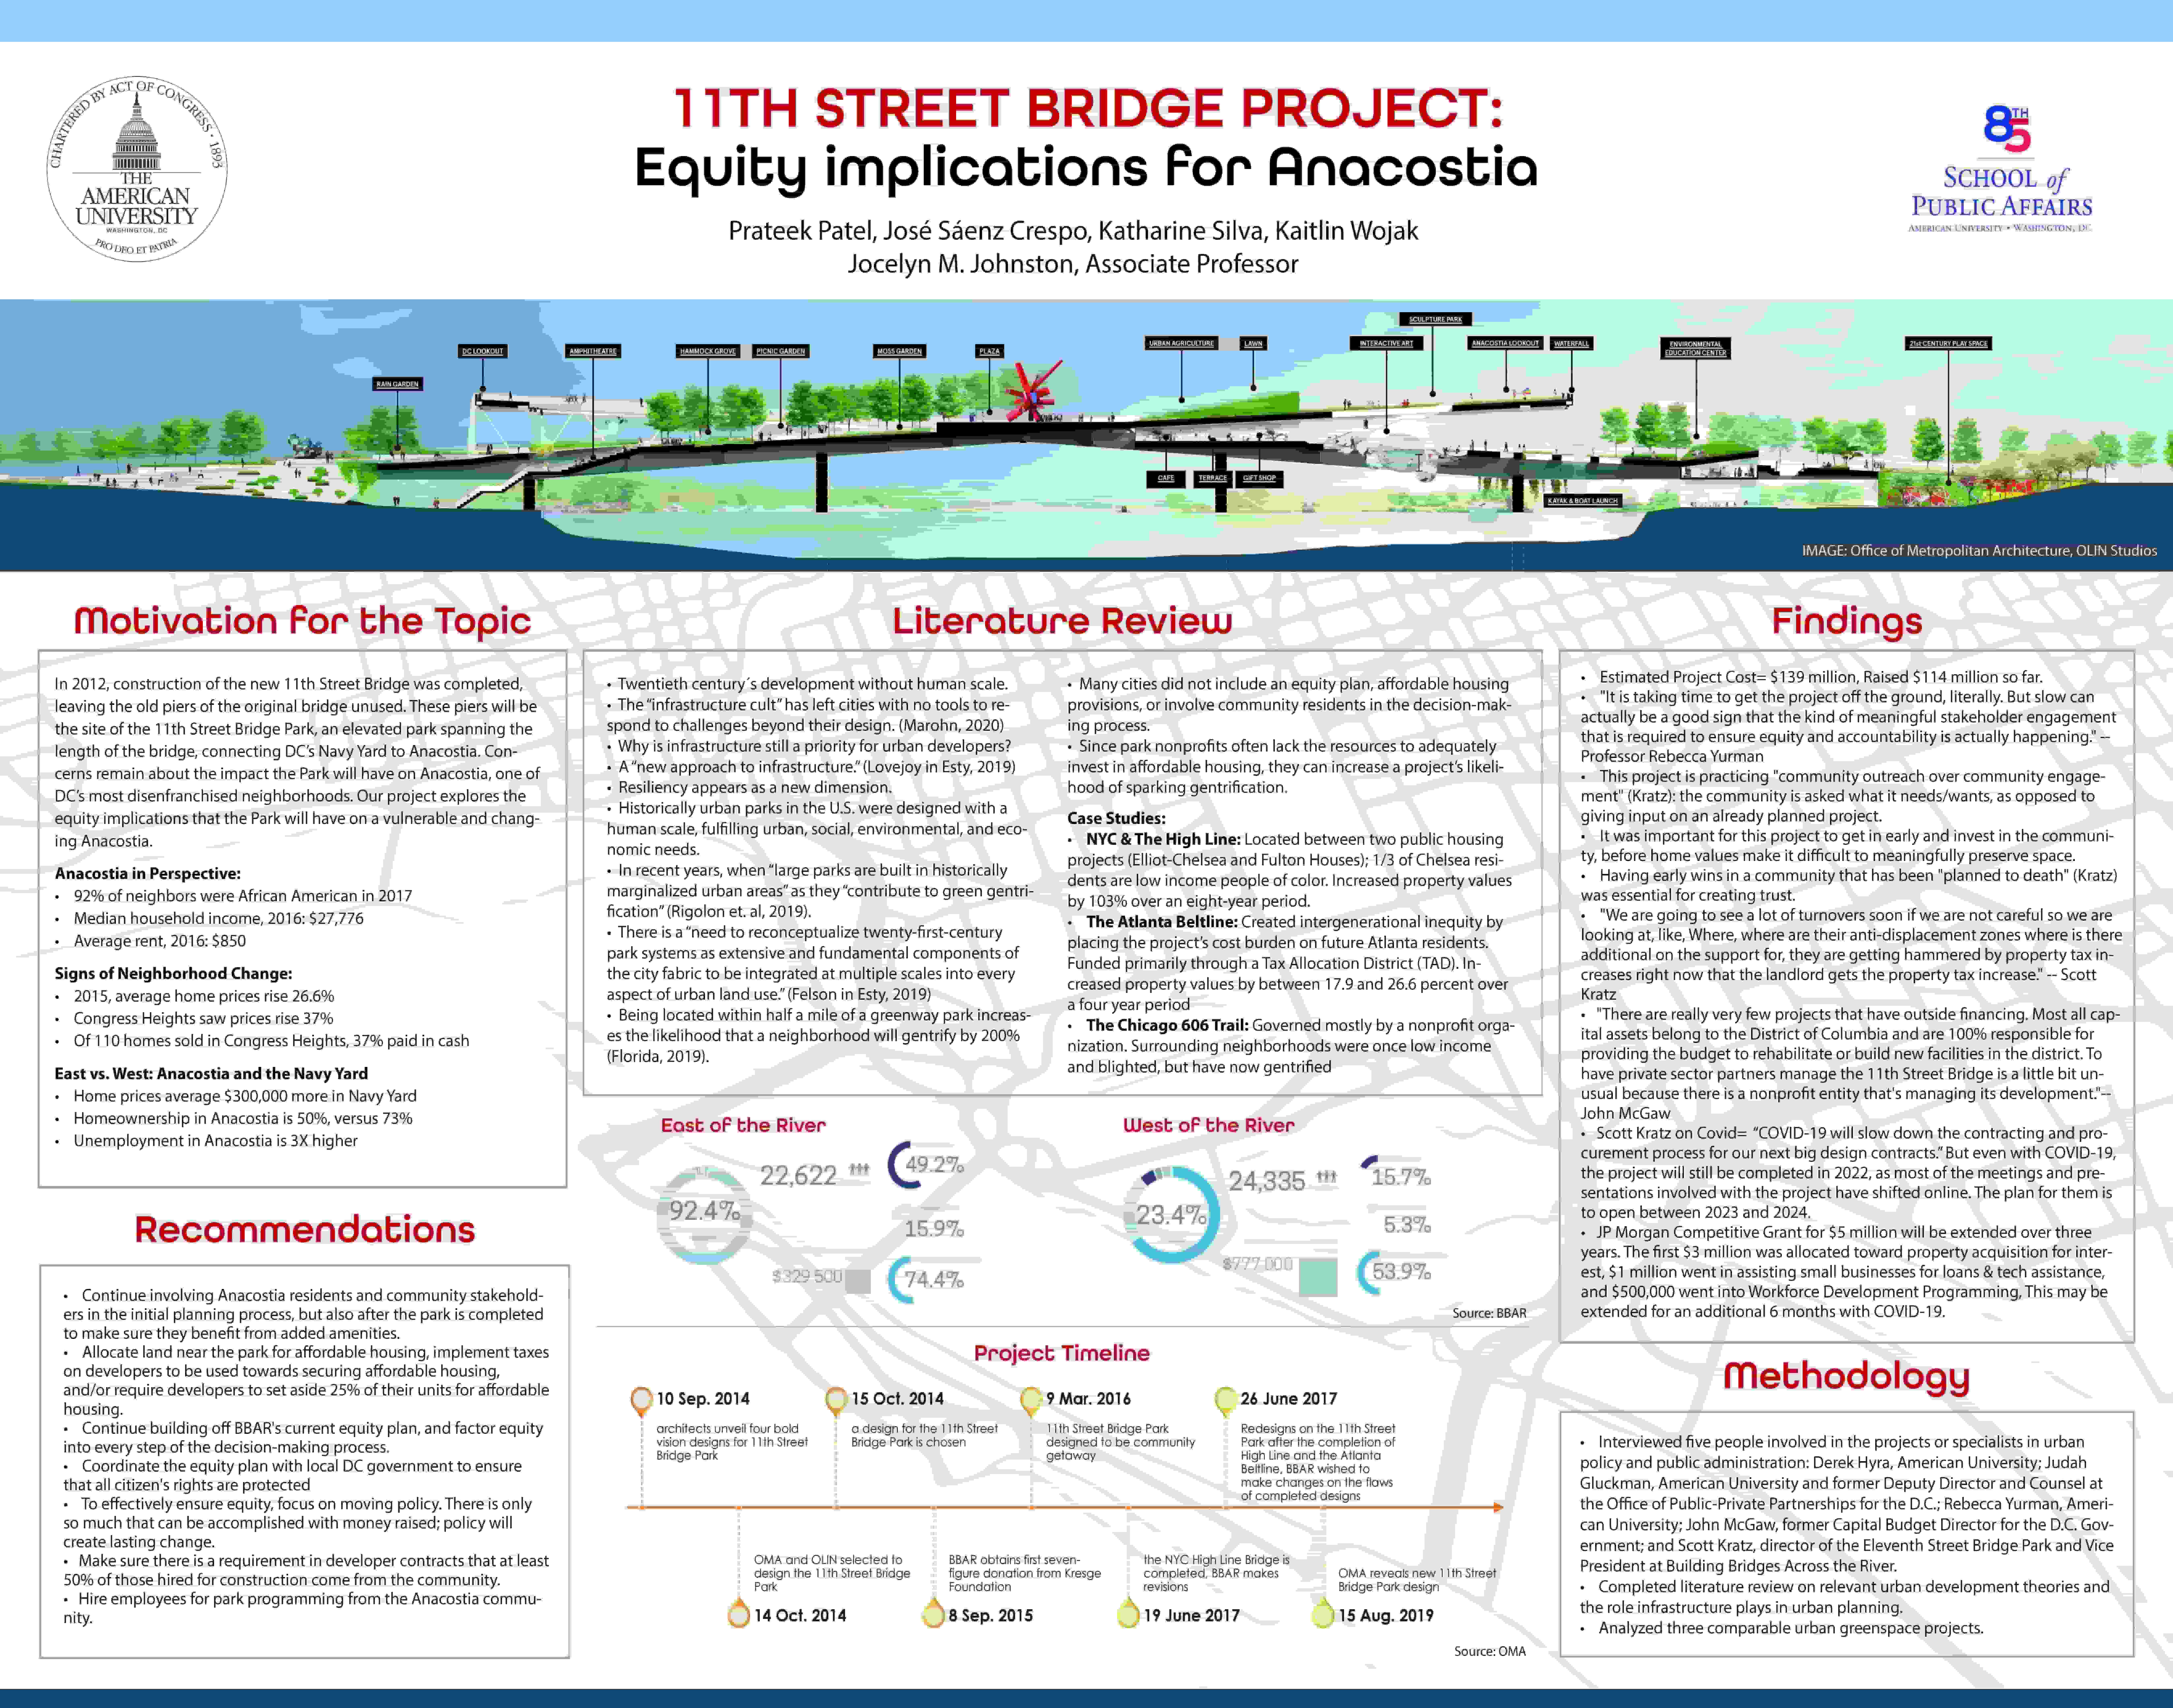 11th Street Bridge Project Poster.